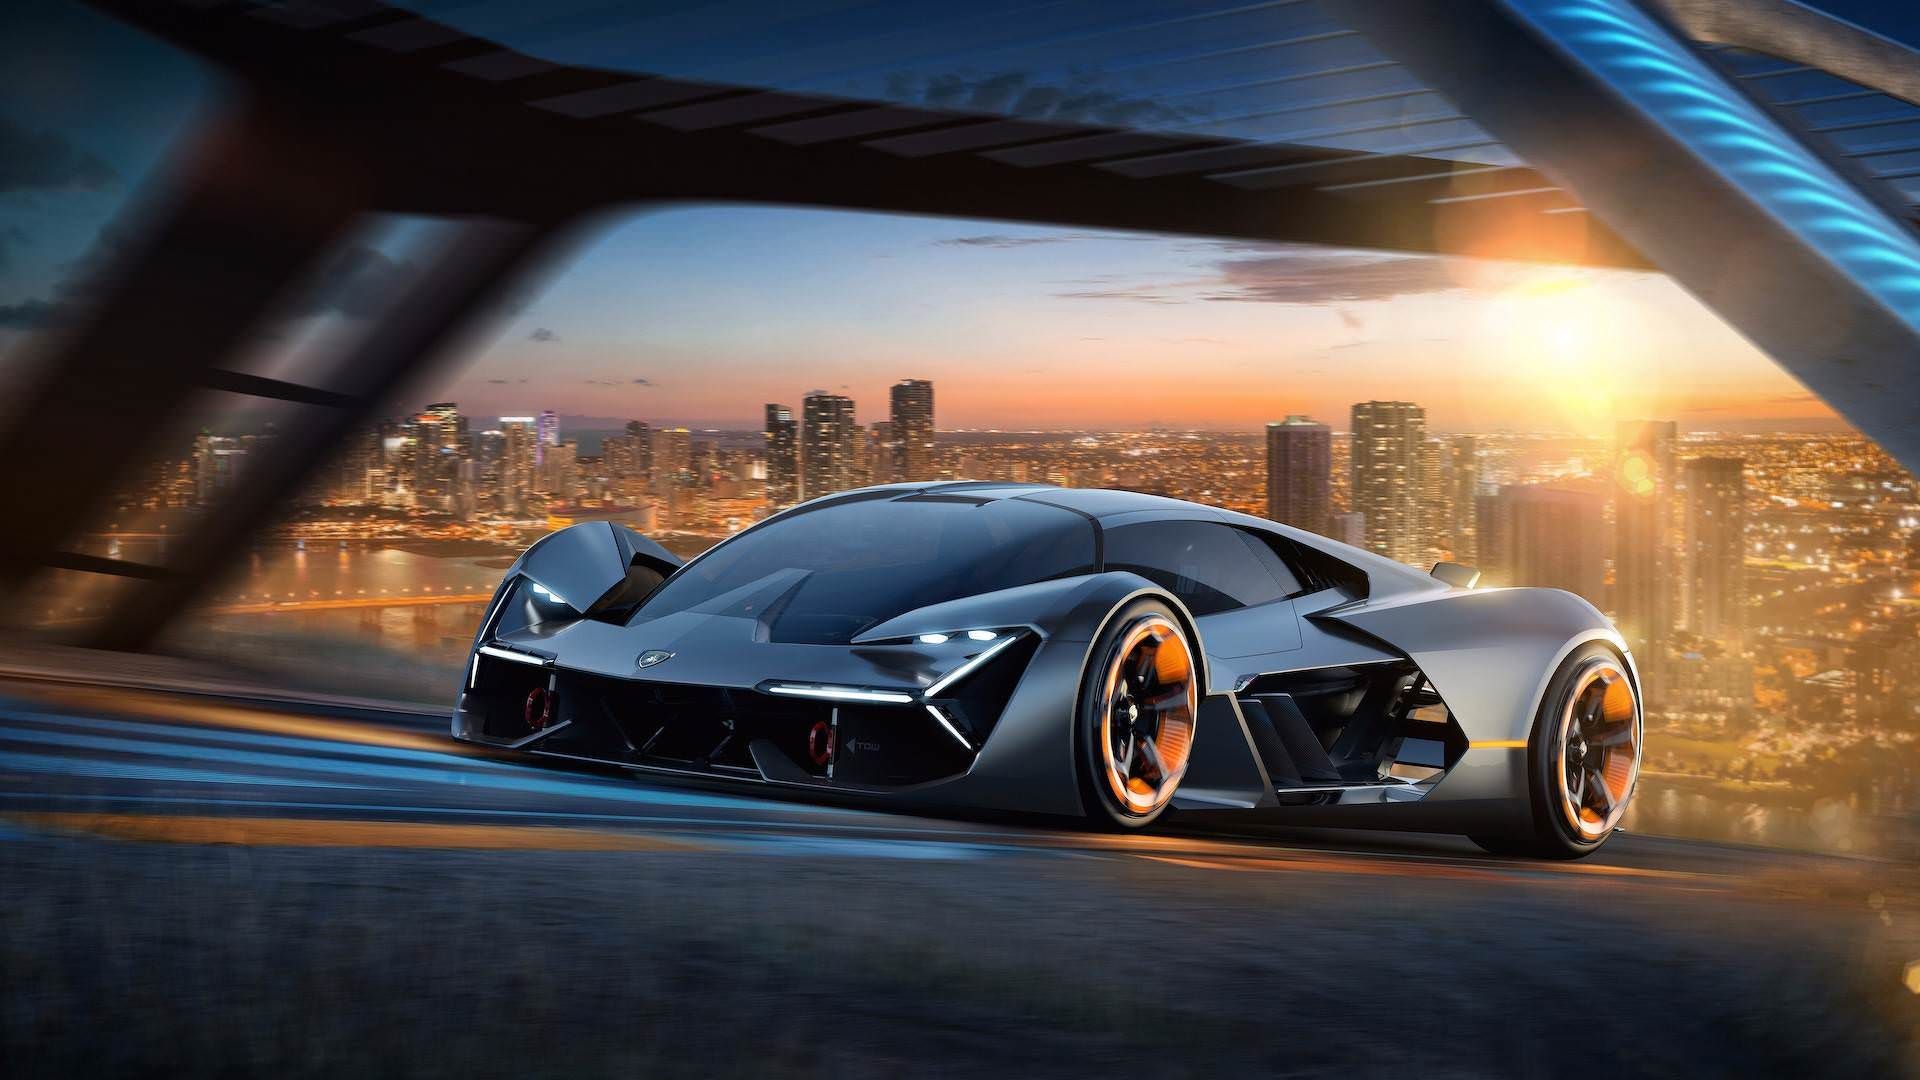 Lamborghini Terzo Millennio Concept / مفهومی لامبورگینی ترزو میلنیو